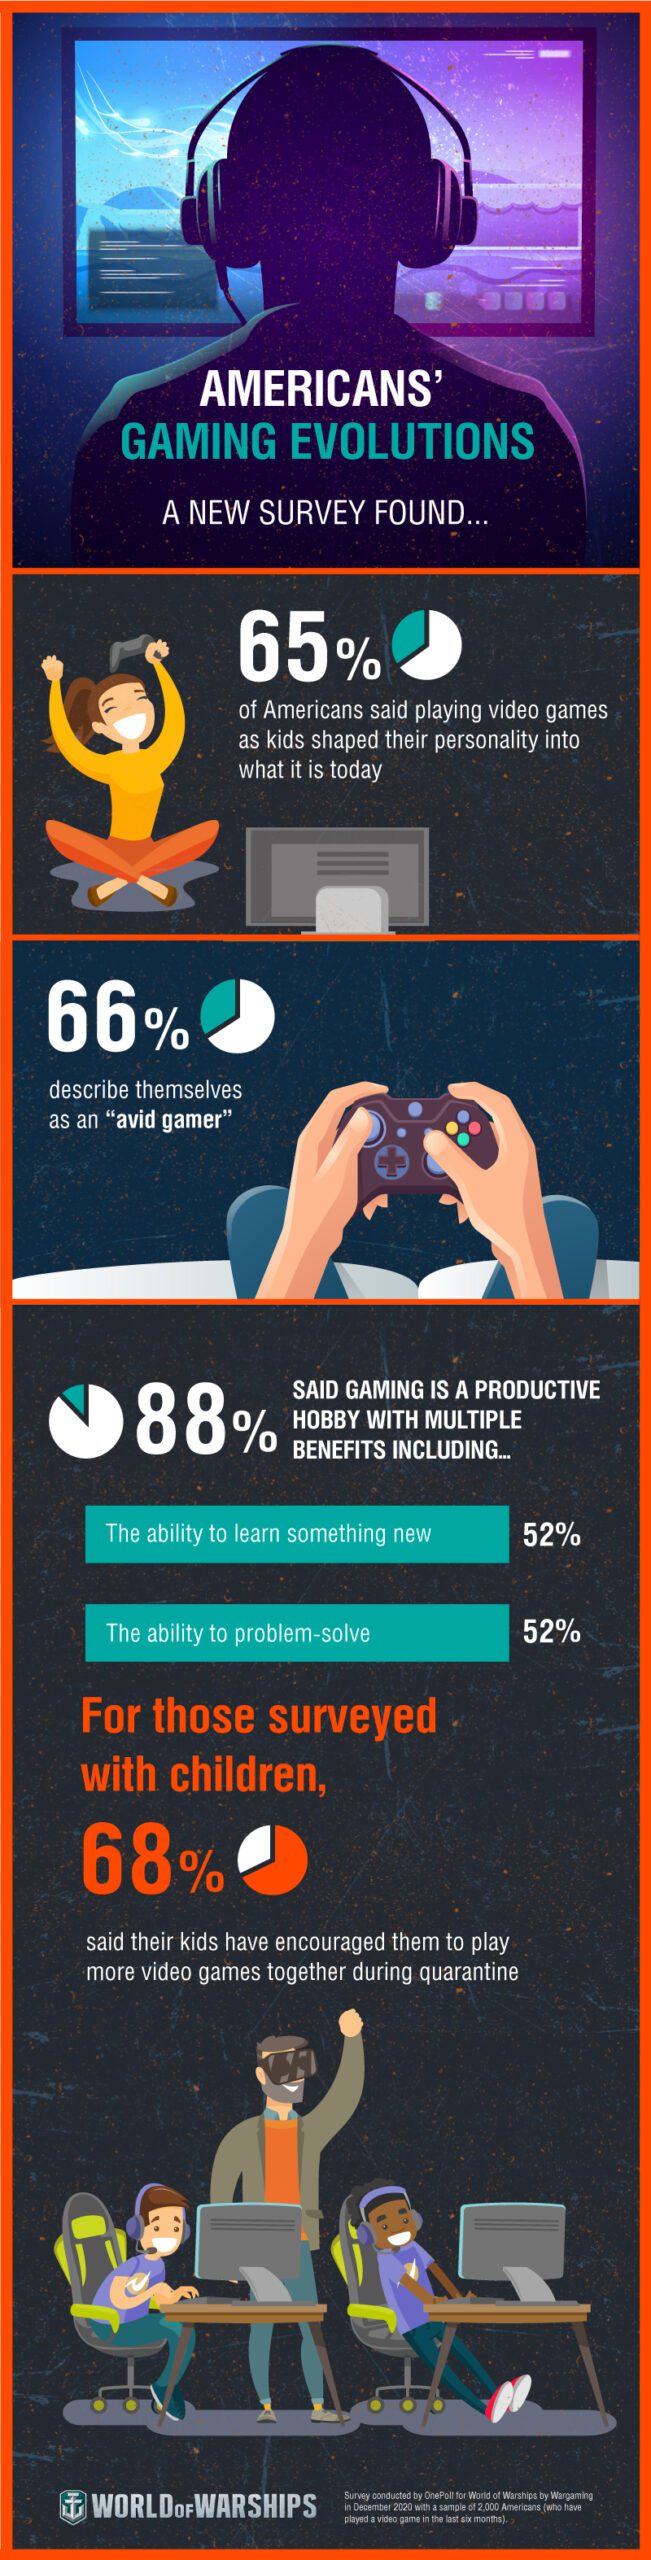 15 Surprising Benefits of Playing Video Games